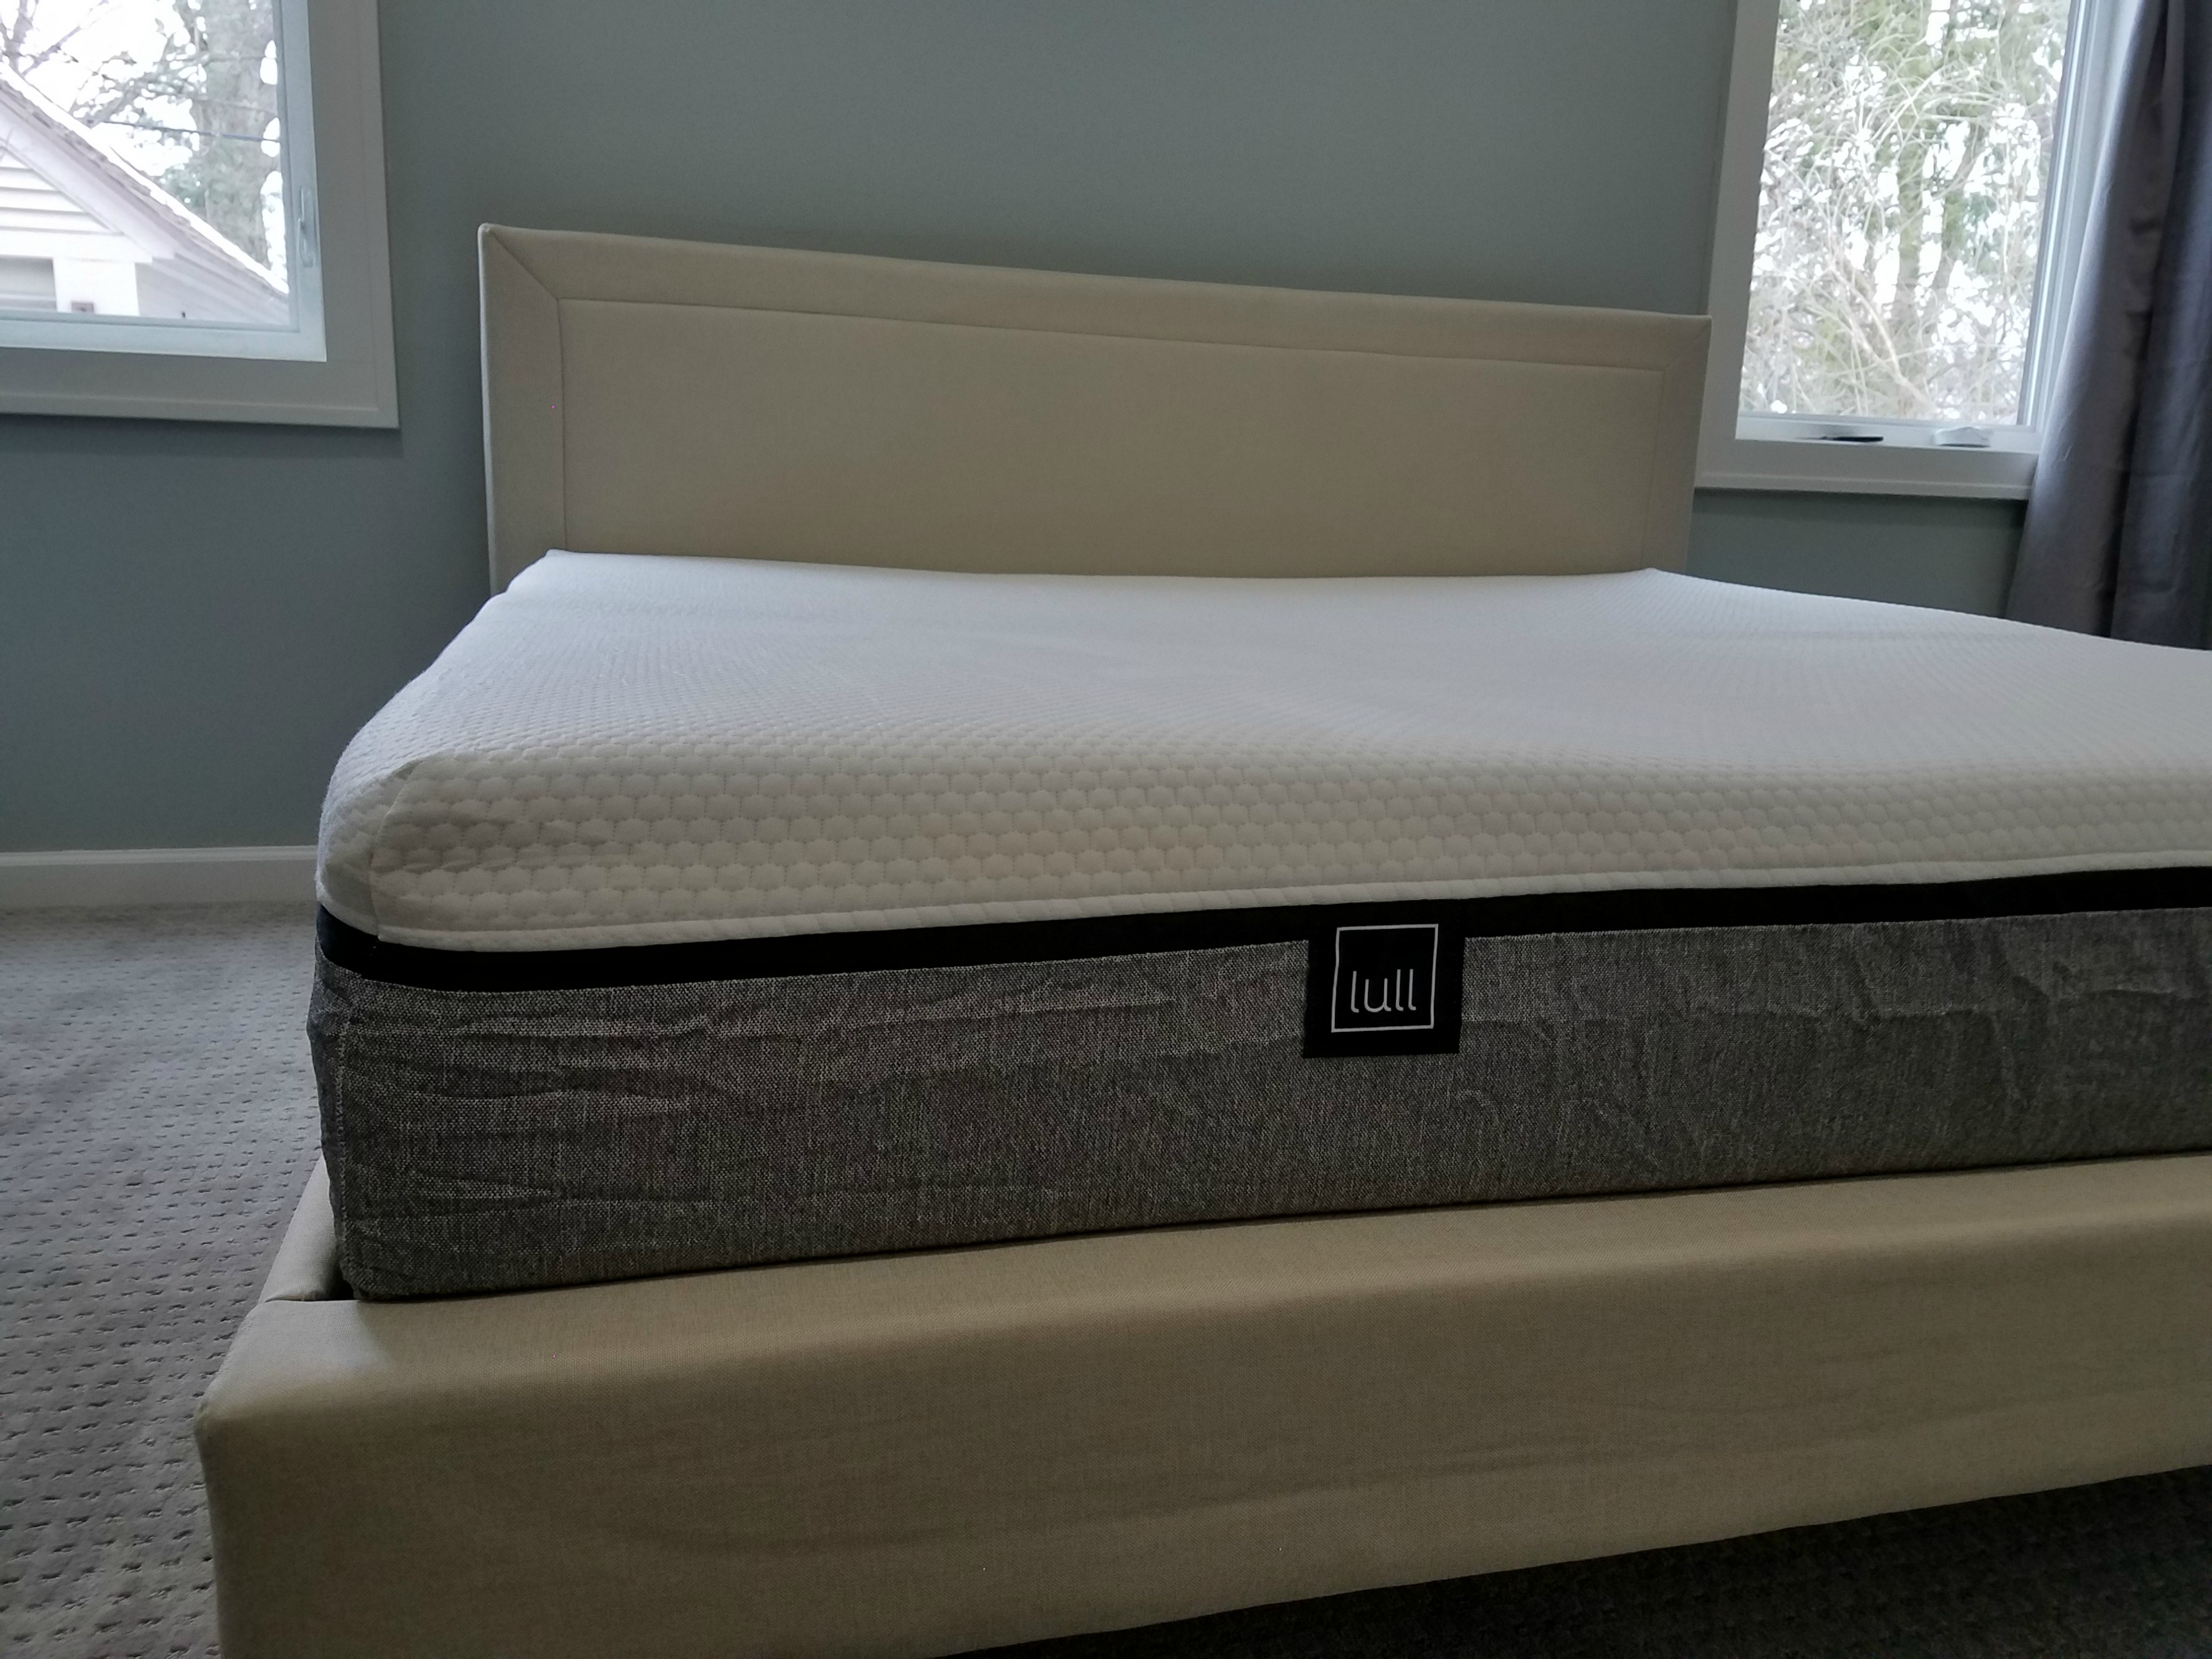 is the lull mattress firm